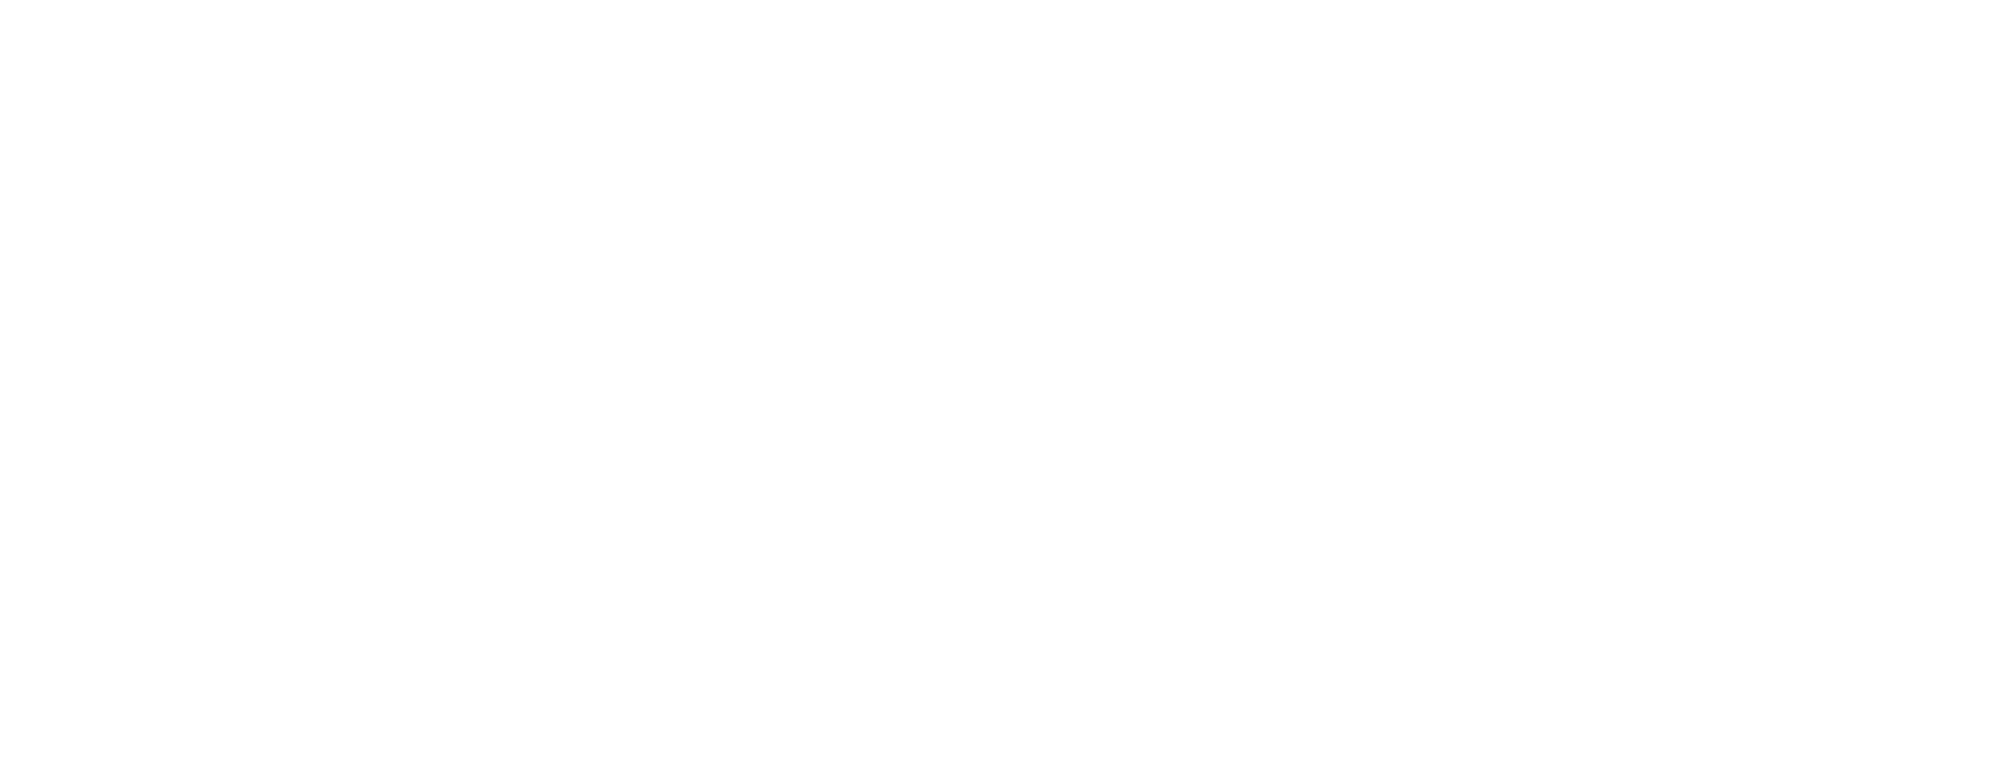 OpenFF Toolkit 0.11.2+0.g1e7fa6ca.dirty documentation logo